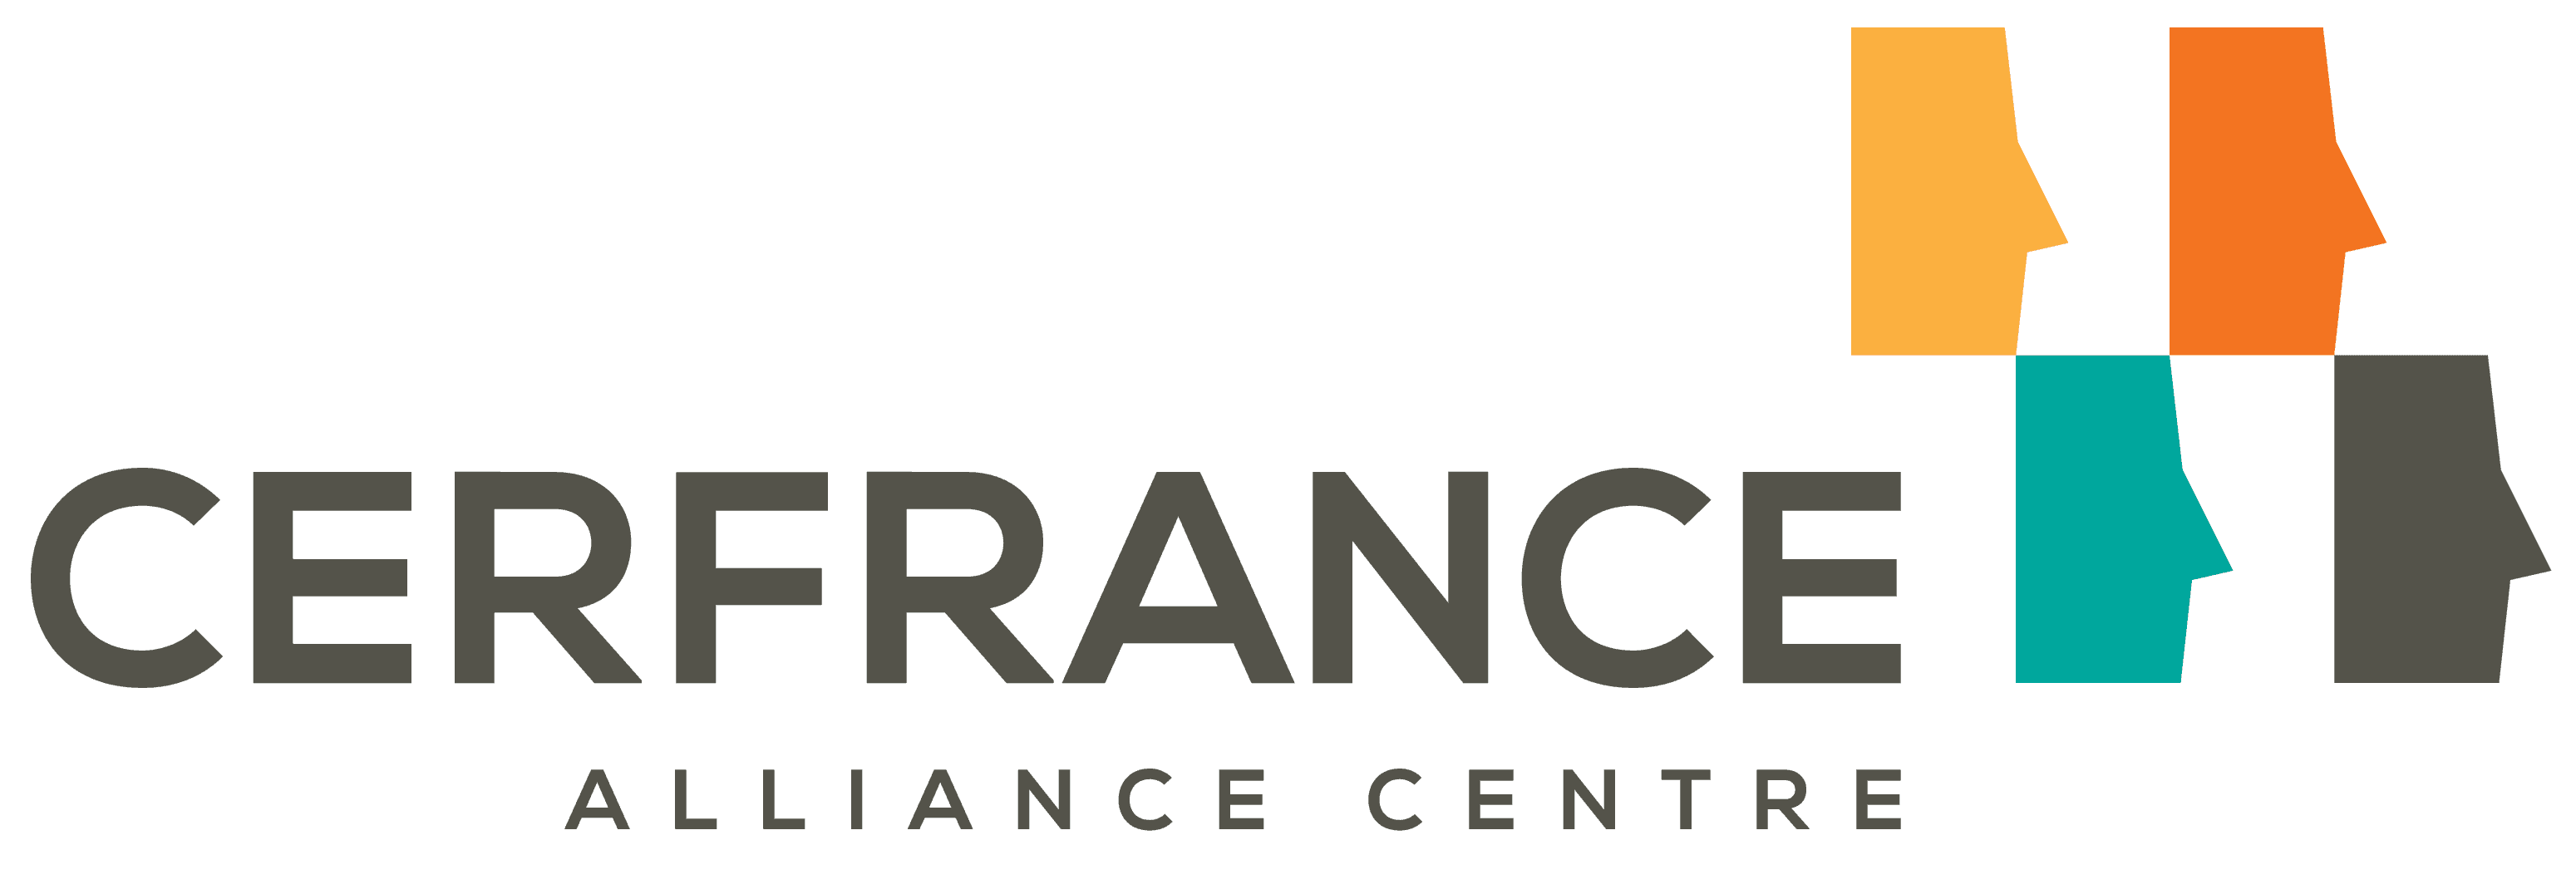 logo de Cerfrance Alliance Centre